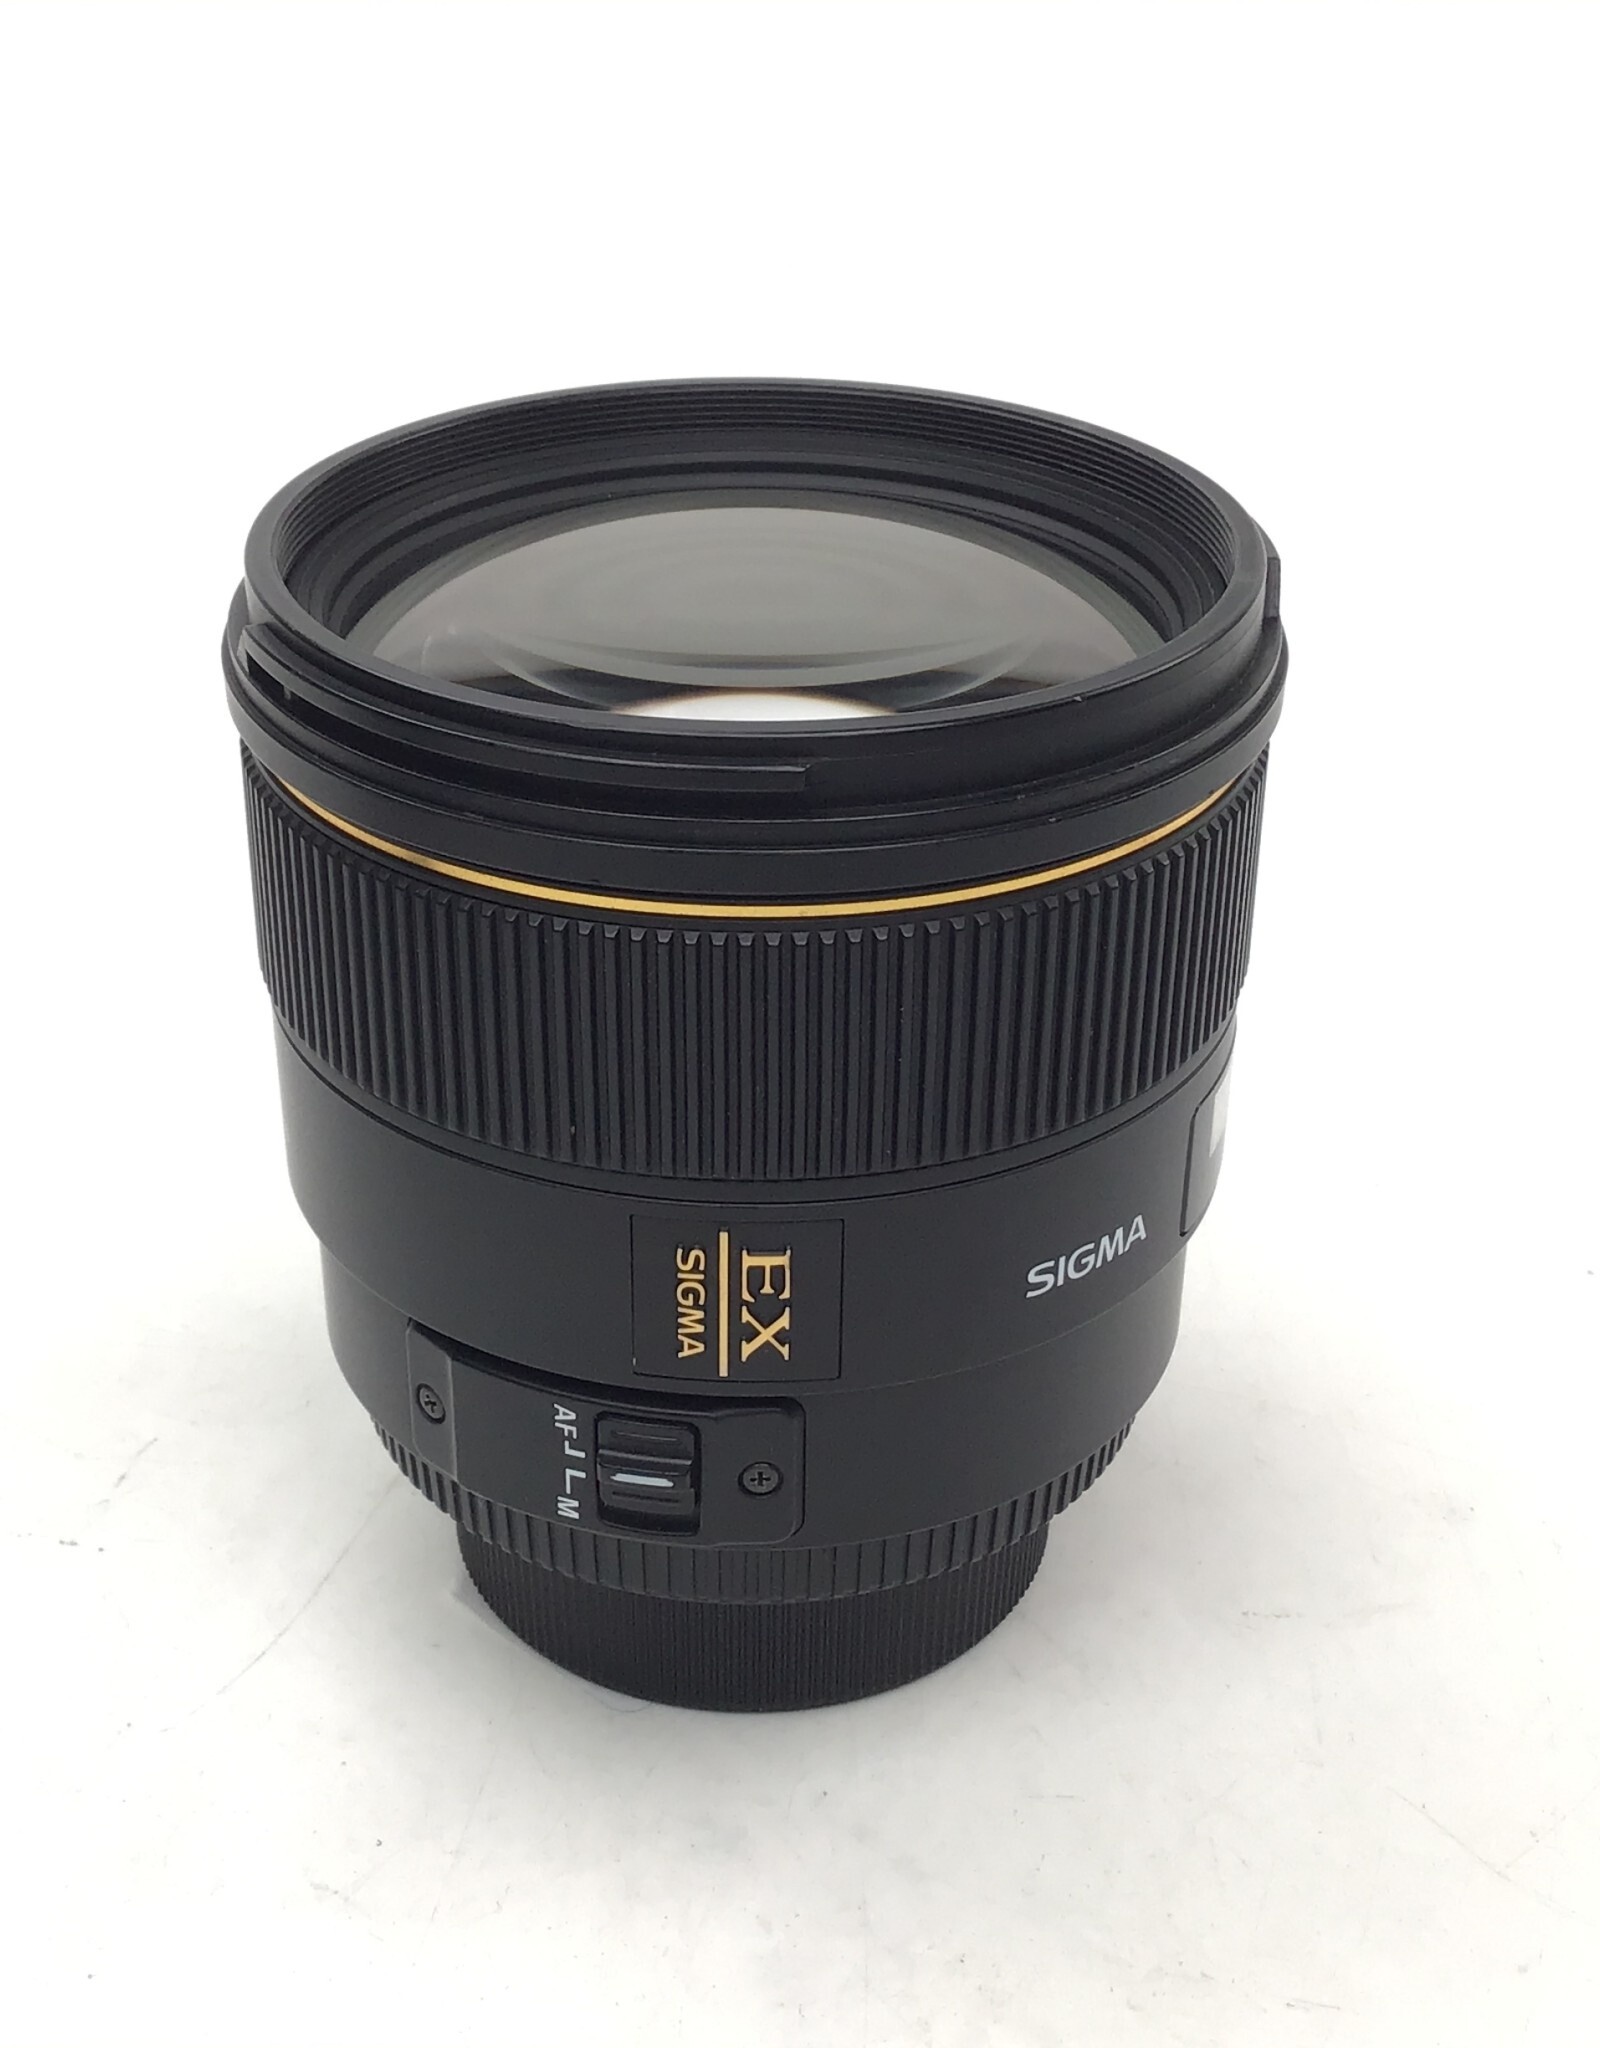 SIGMA Sigma EX 85mm f1.4 DG HSM Lens for Nikon Used Good